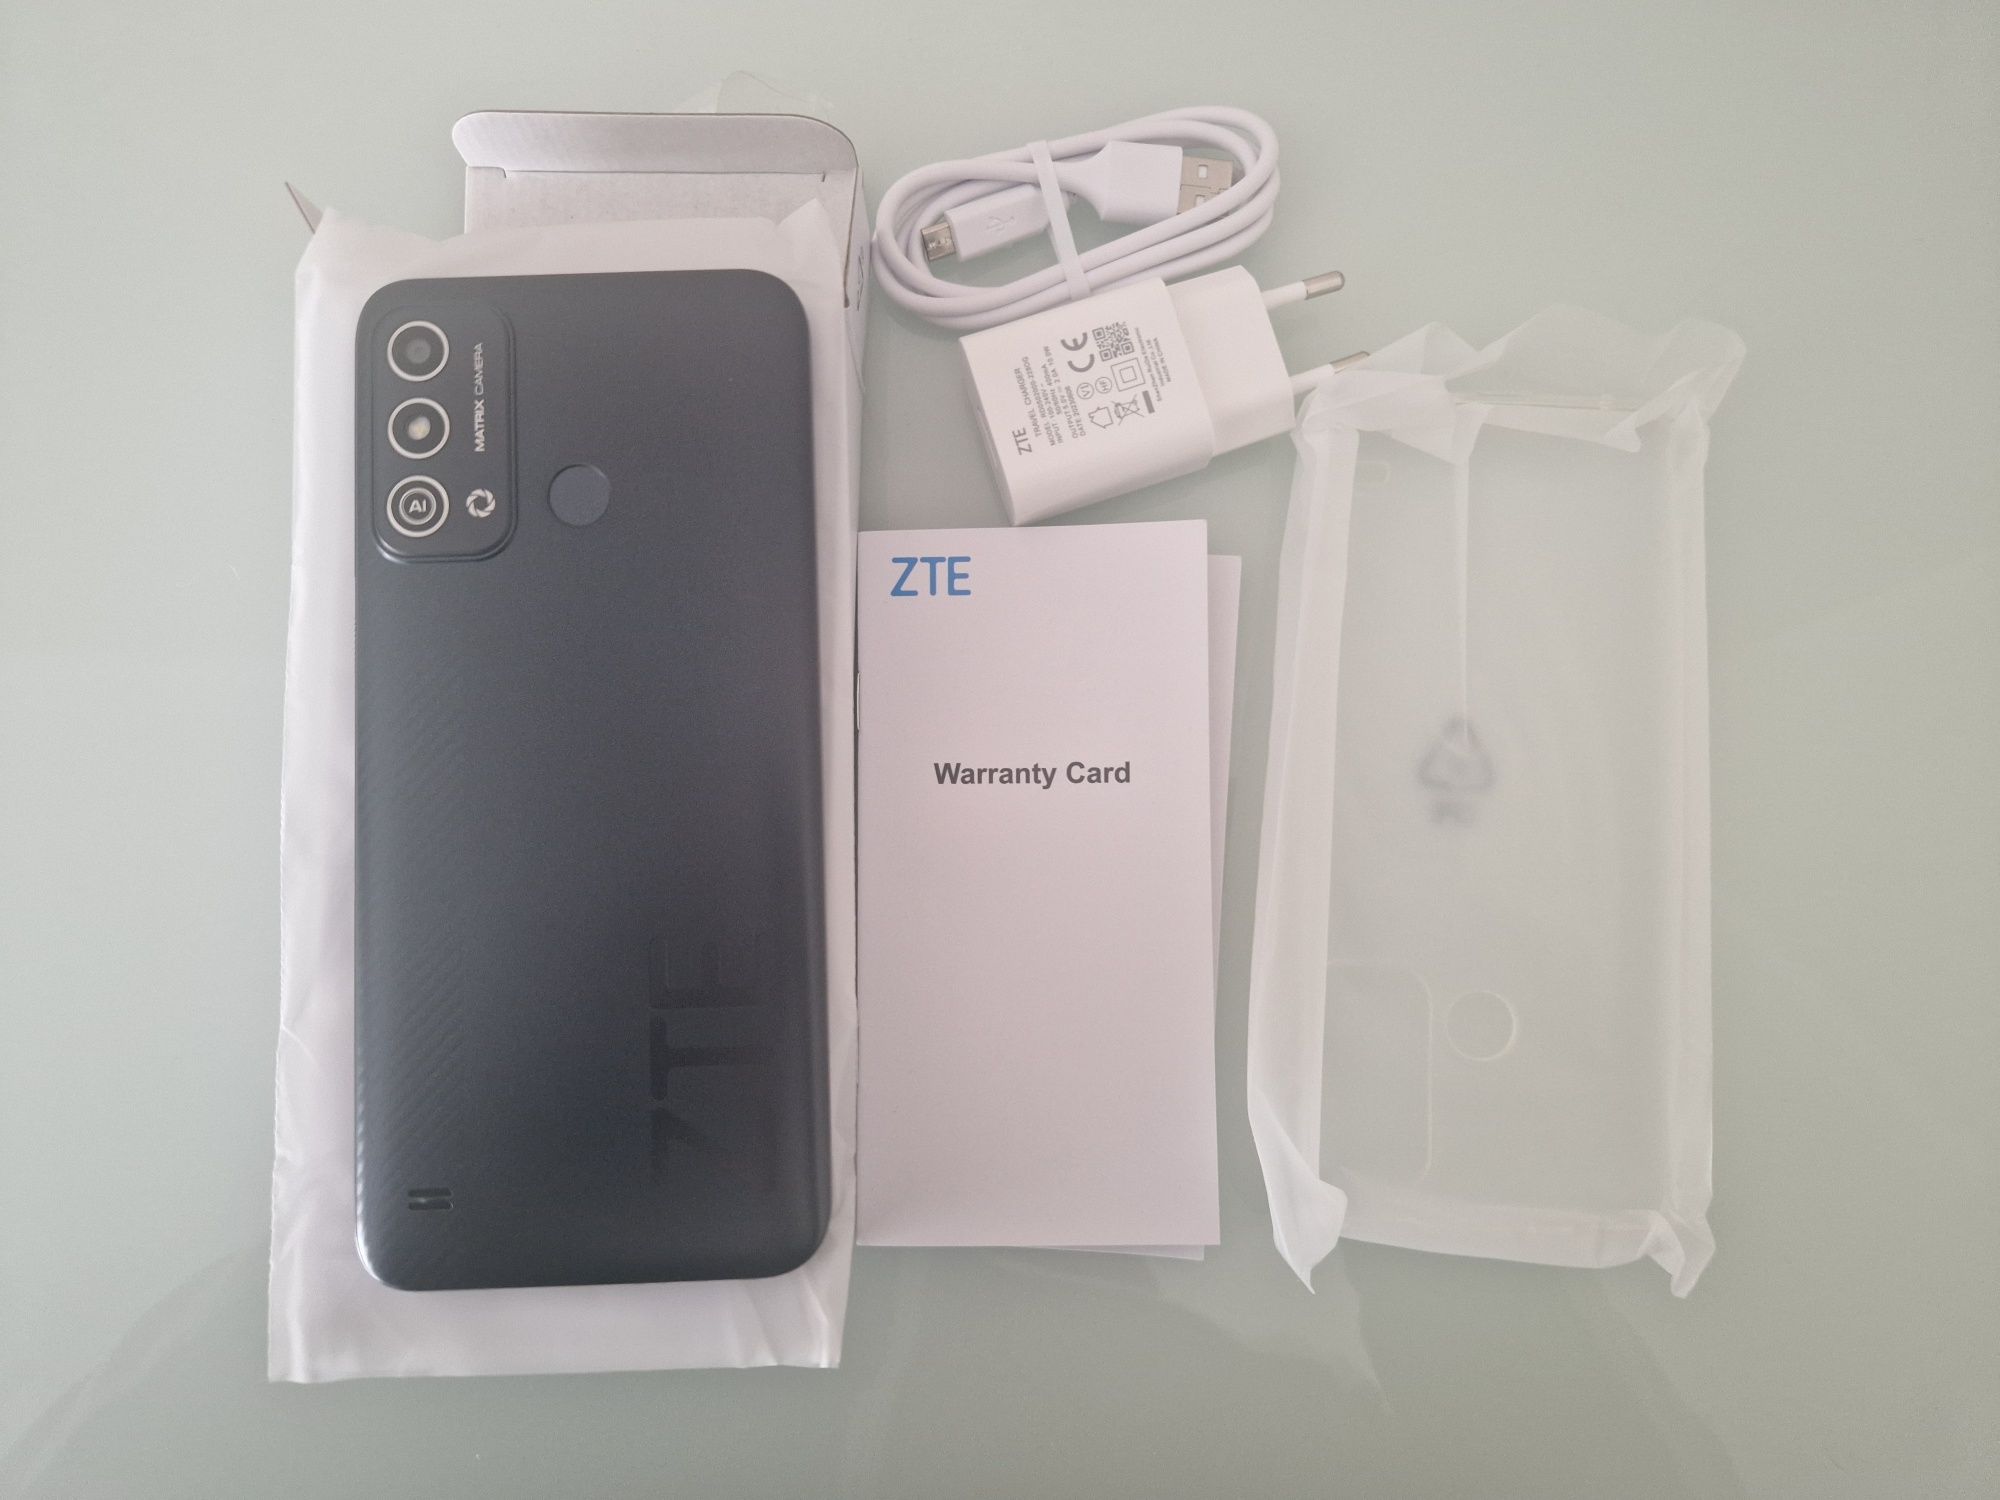 Novo Smartphone ZTE Blade A53+